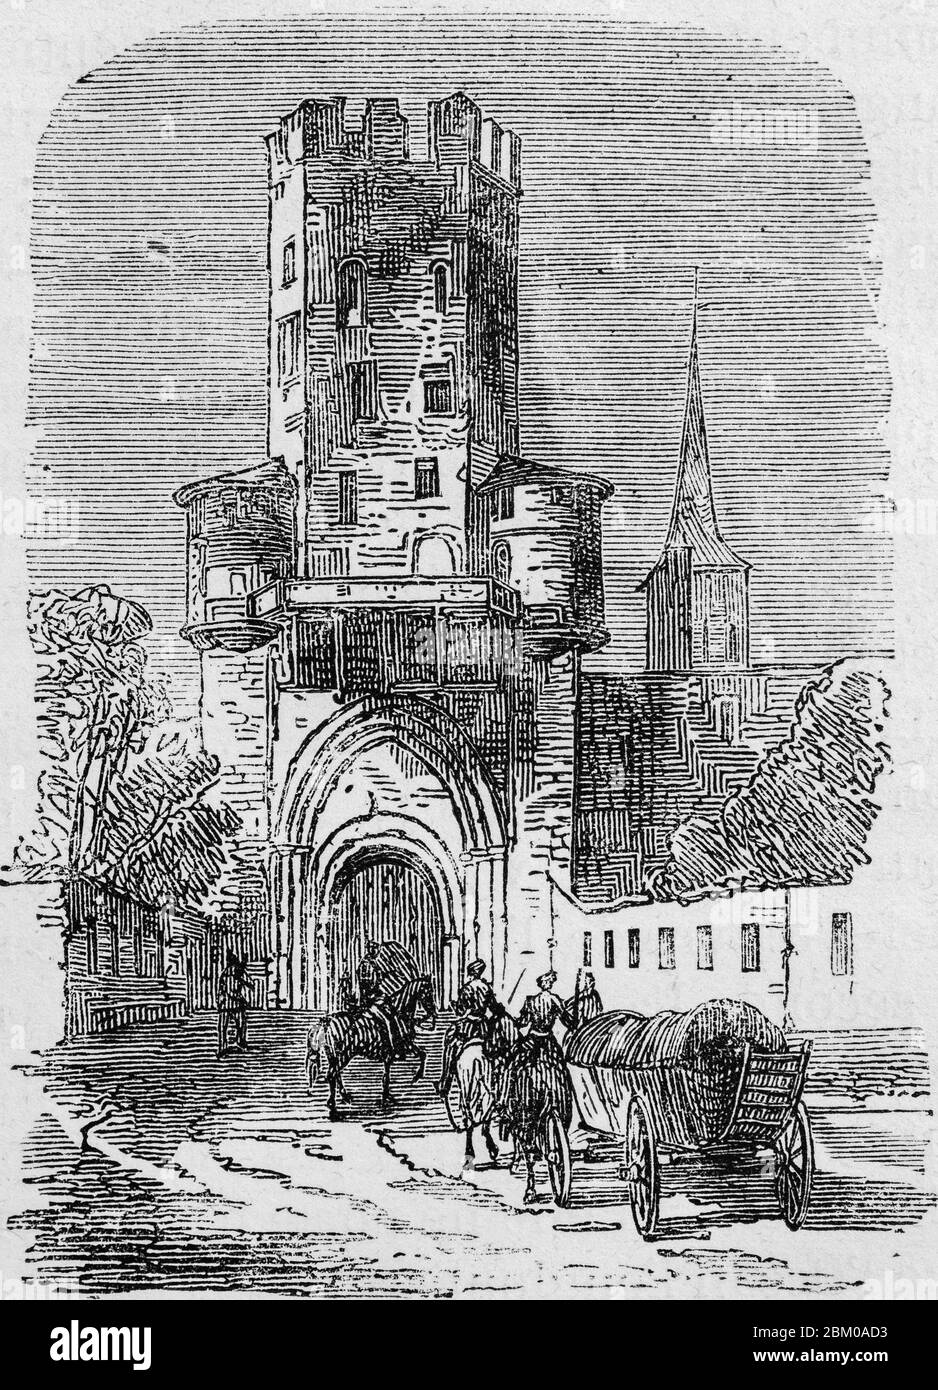 Porte S,-Severin à Cologne, City Gate St,-Severin in Cologne, Le Rhin by Victor Hugo, Paris about 1843 Stock Photo